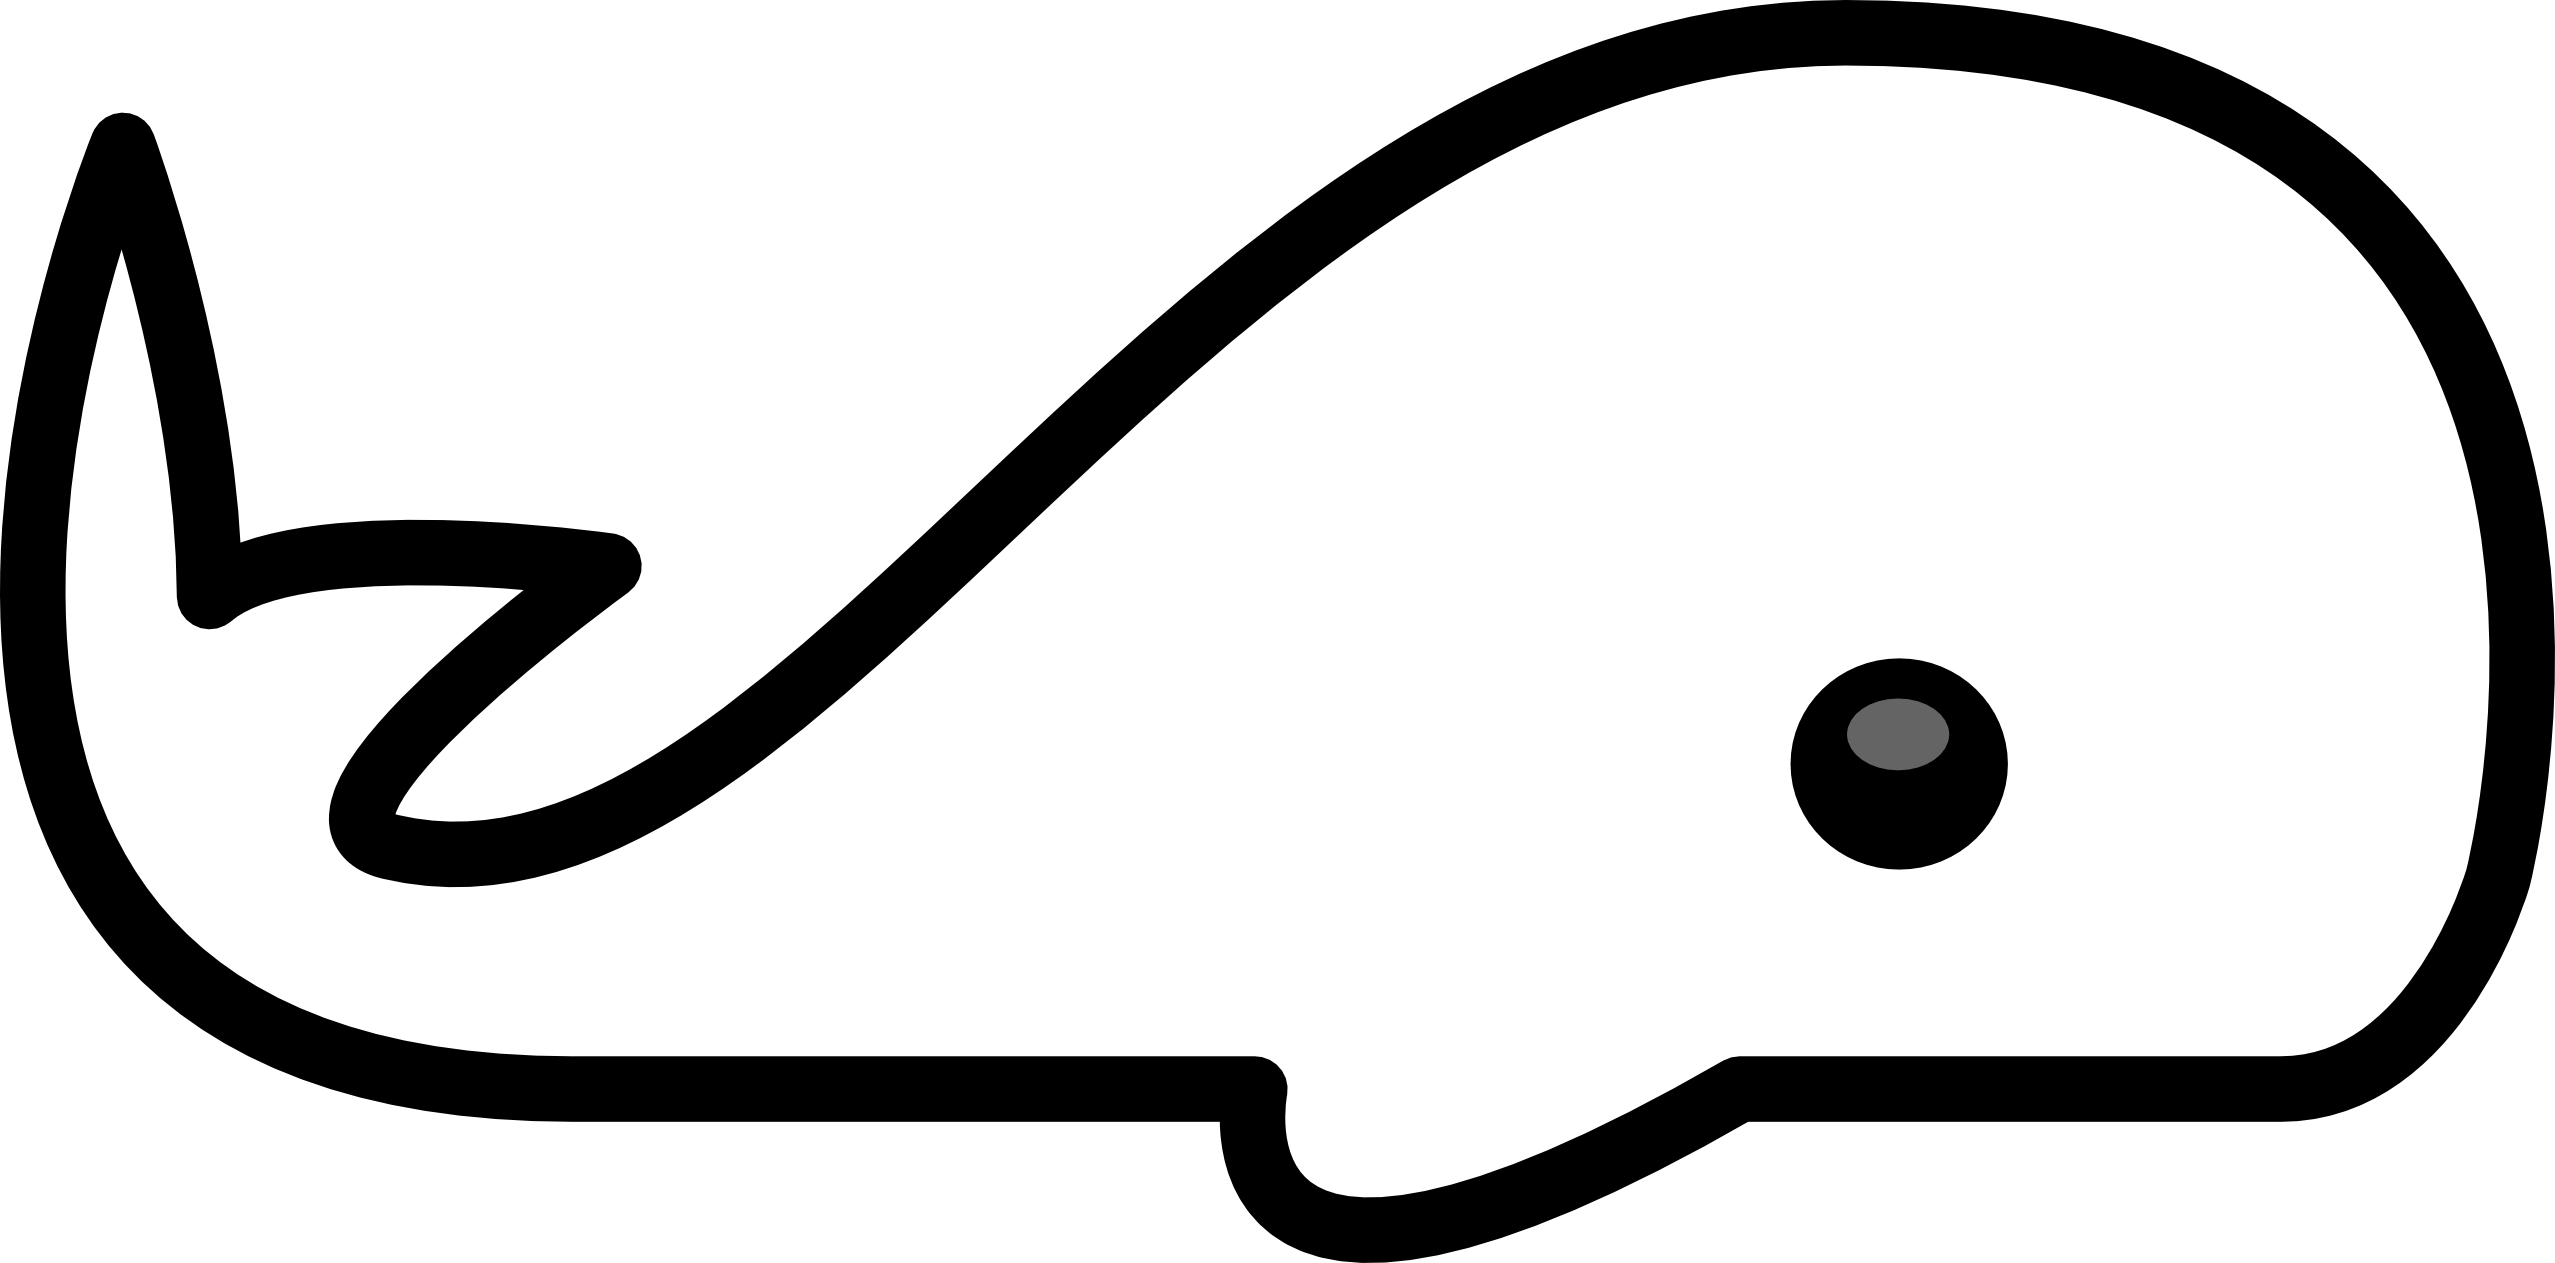 Pink Whale Clip Art | Clipart Panda - Free Clipart Images